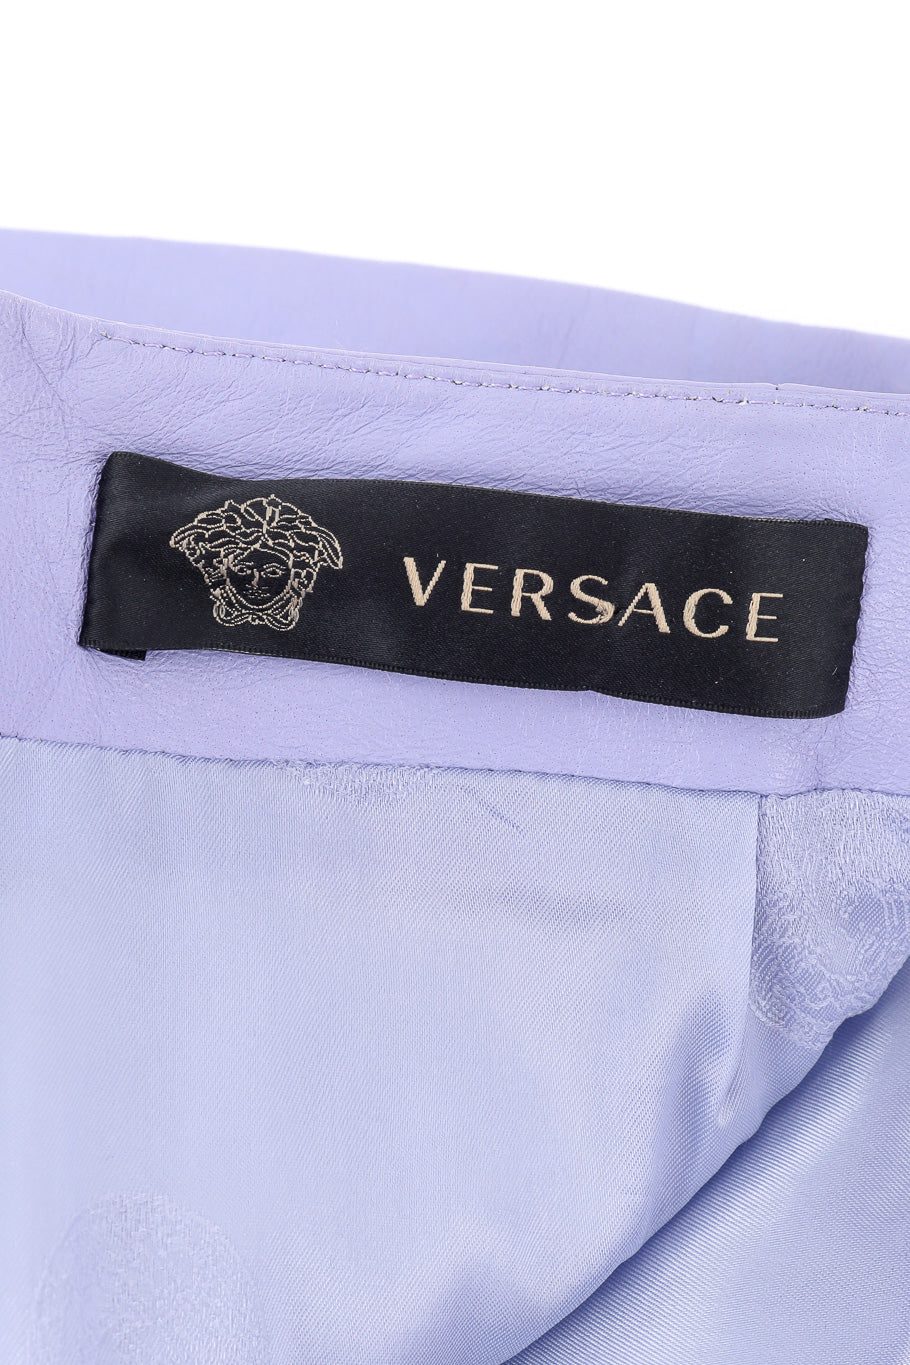 Versace Embossed Leather Pencil Skirt label closeup @Recessla